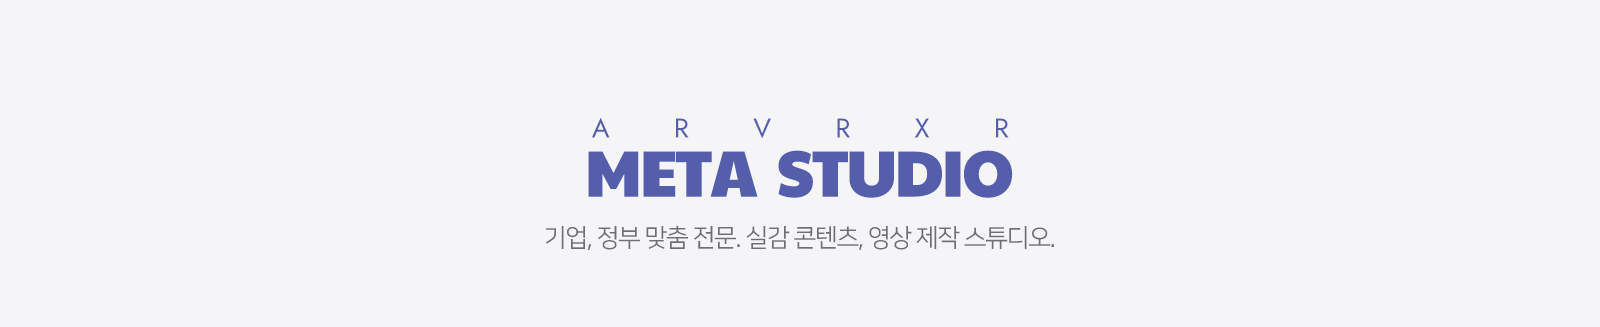 AR VR XR META STUDIO 기업, 정부 맞춤 전문, 실감 콘텐츠, 영상 제작 스튜디오.